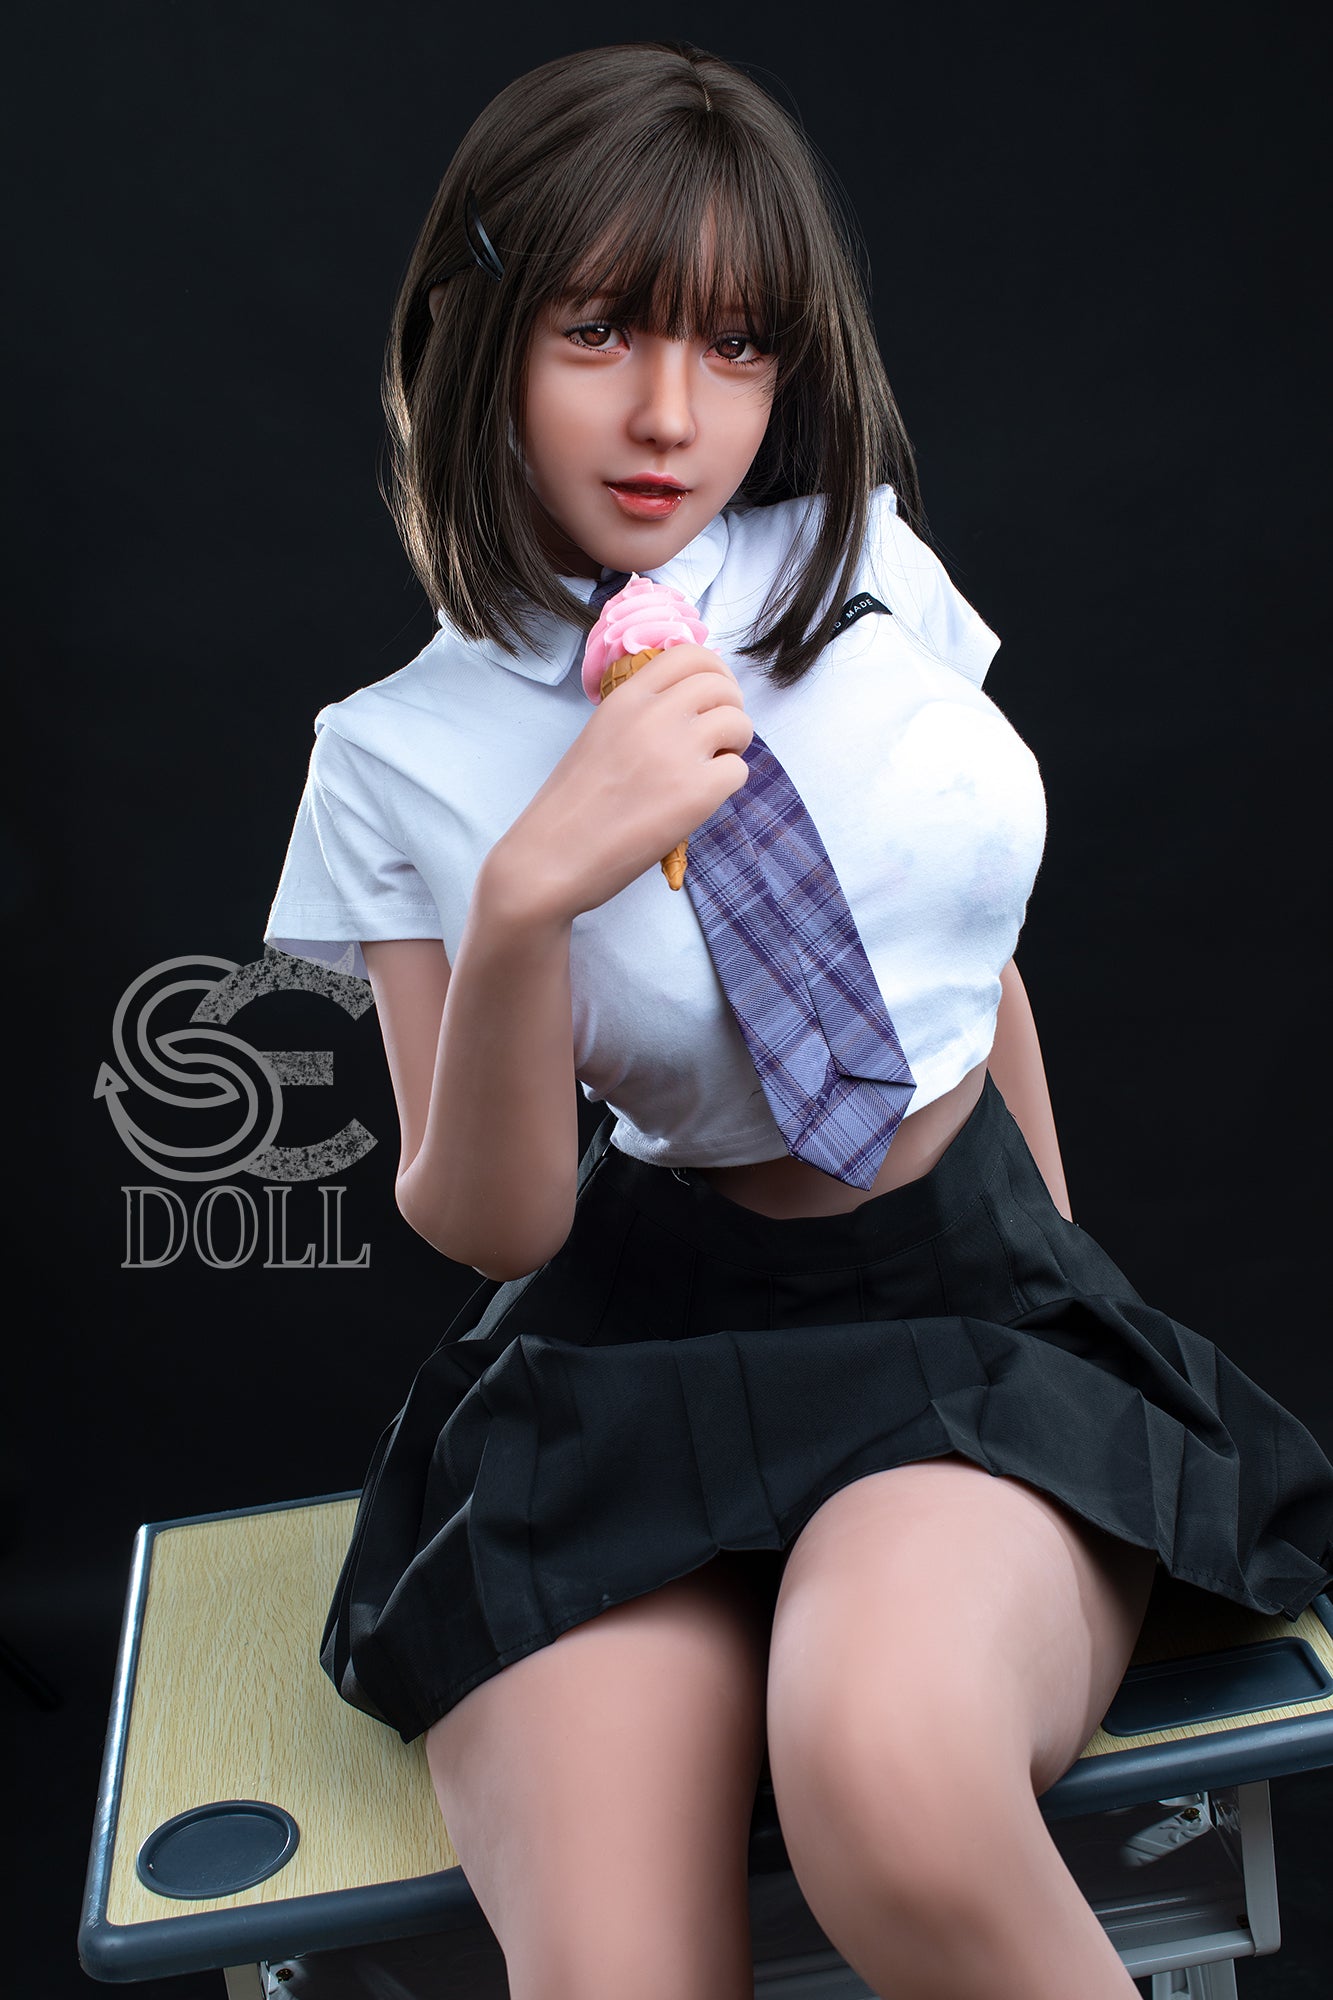 SEDOLL 161 cm F TPE - Akane | Buy Sex Dolls at DOLLS ACTUALLY